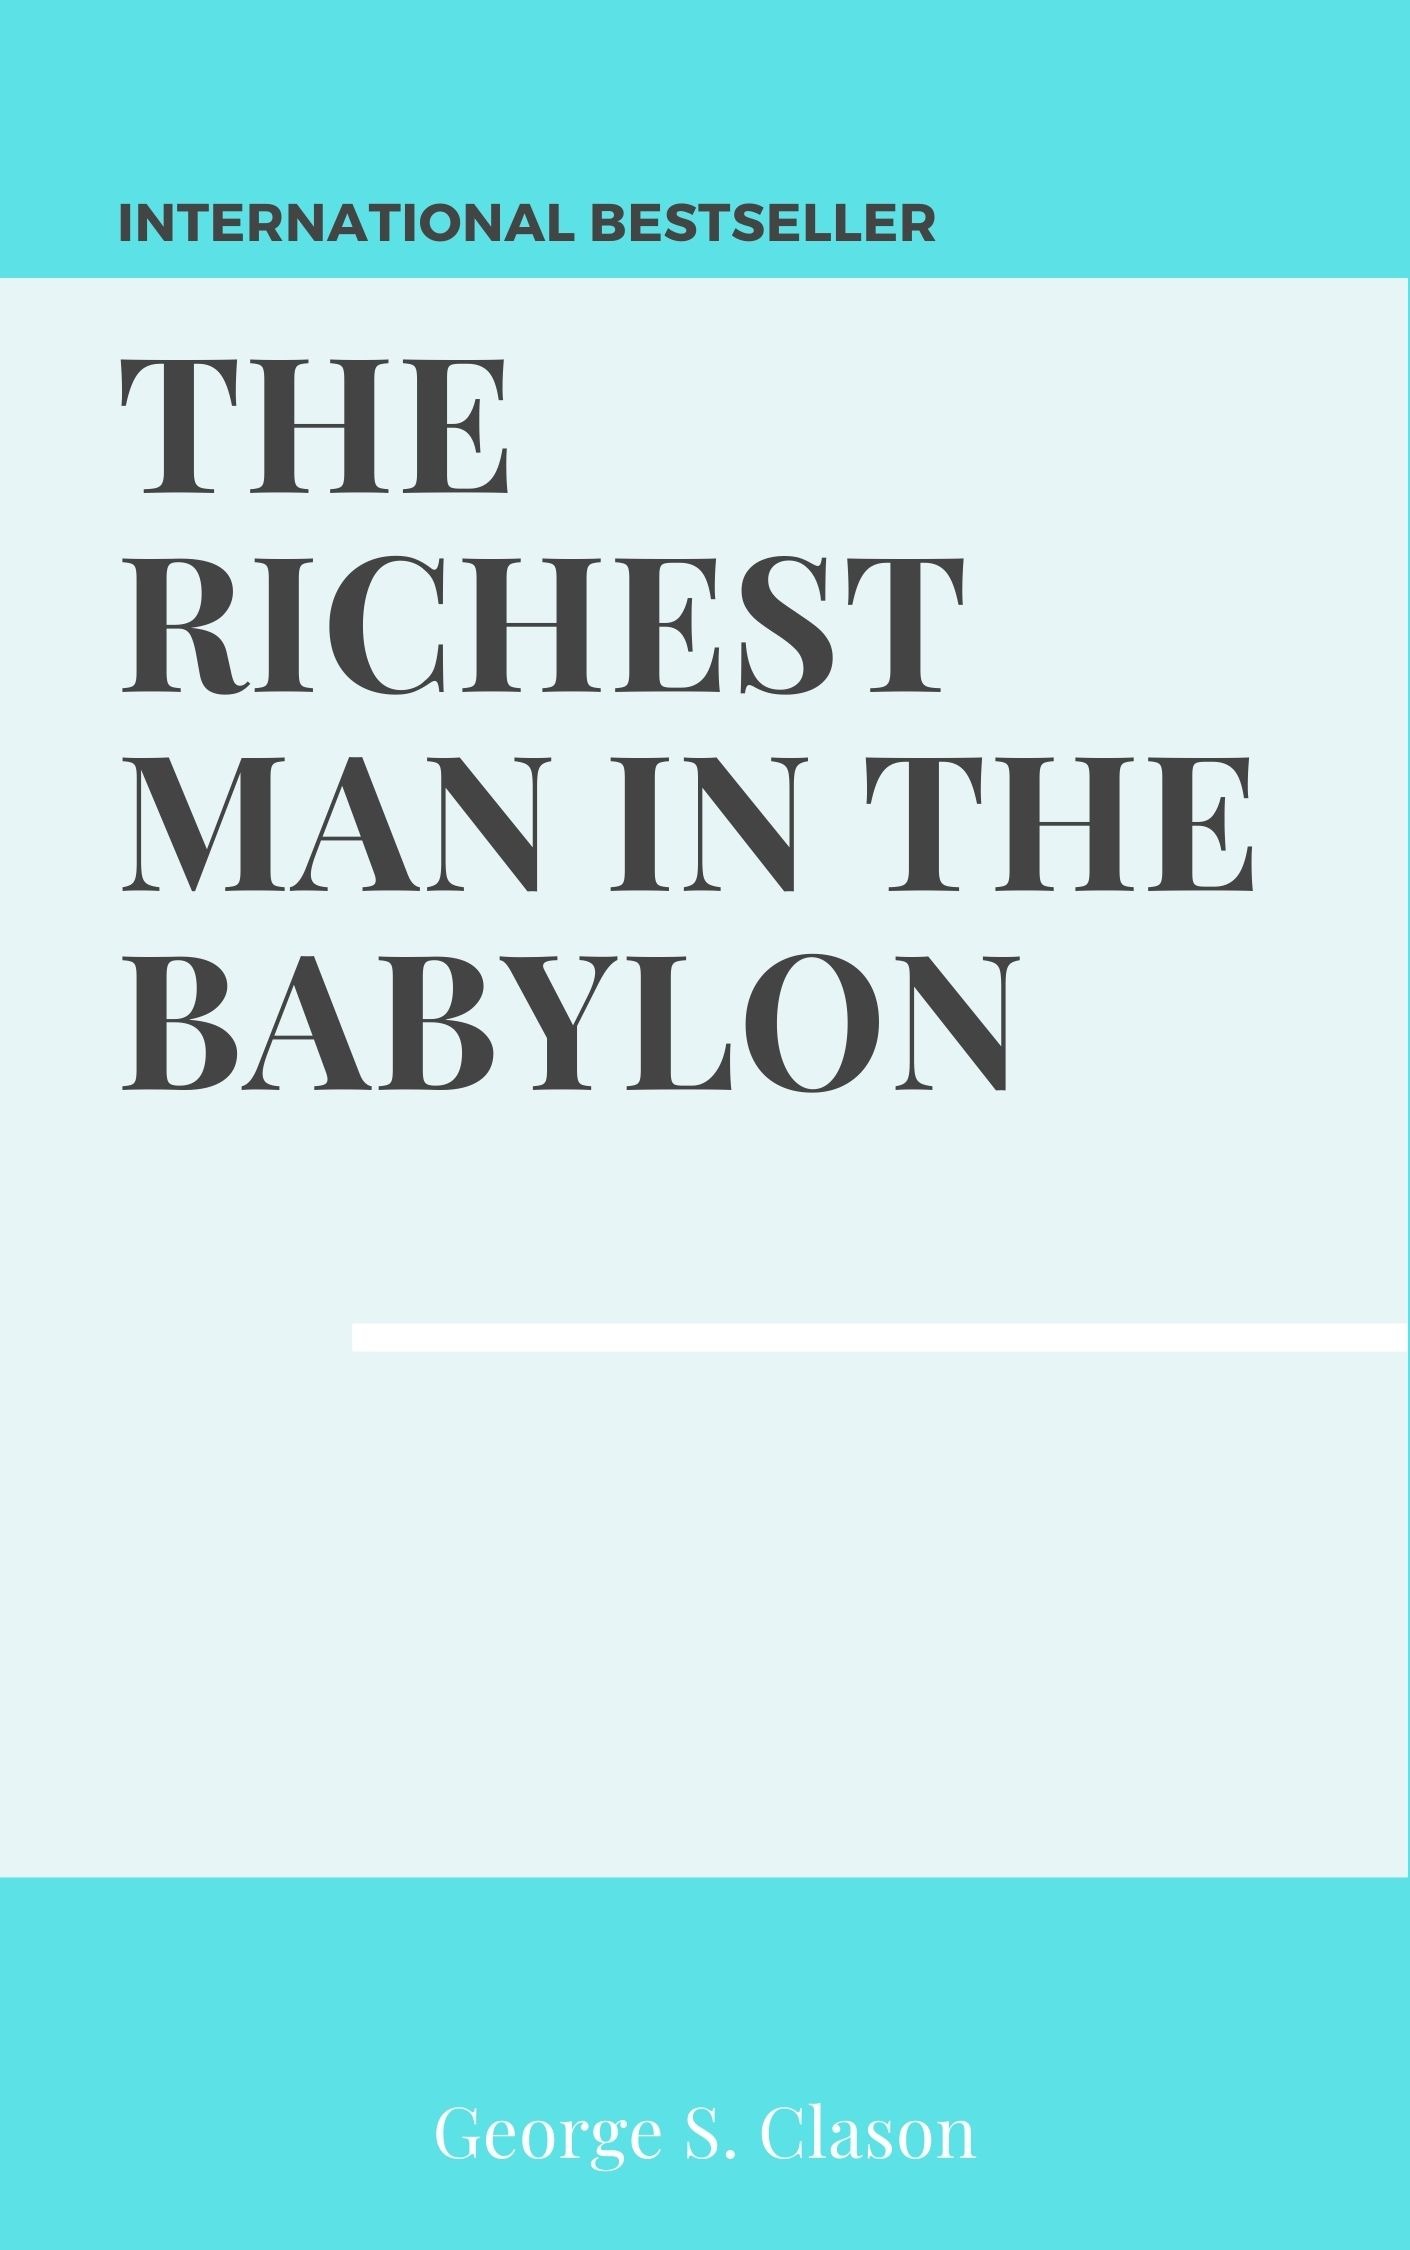 THE RICHEST MAN IN THE BABYLON